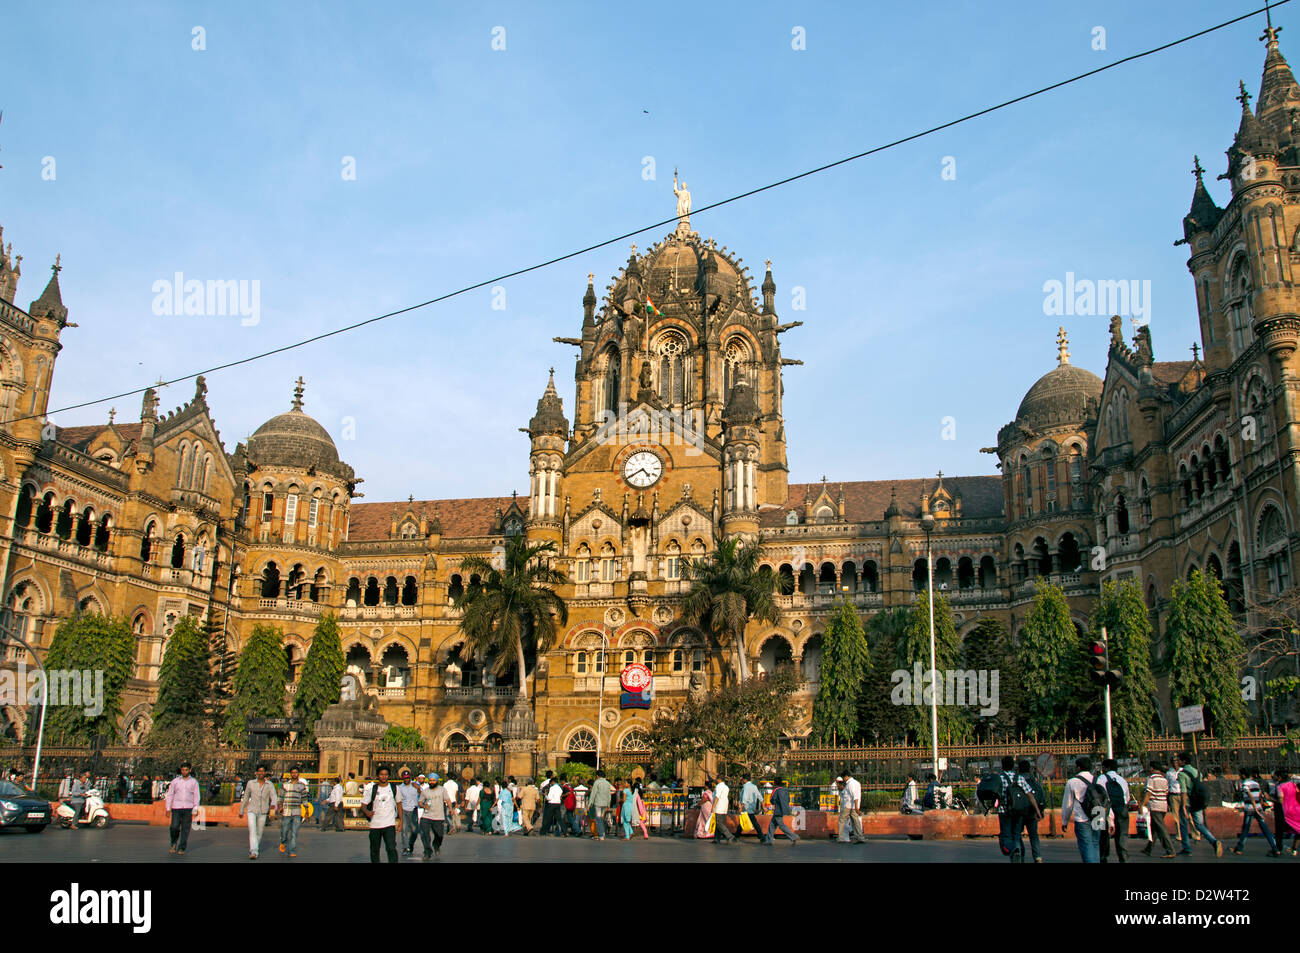 Der Chhatrapati Shivaji Terminus (Victoria Terminus) Station Mumbai (Bombay) Victorian Gothic Revival Architektur Indien Stockfoto